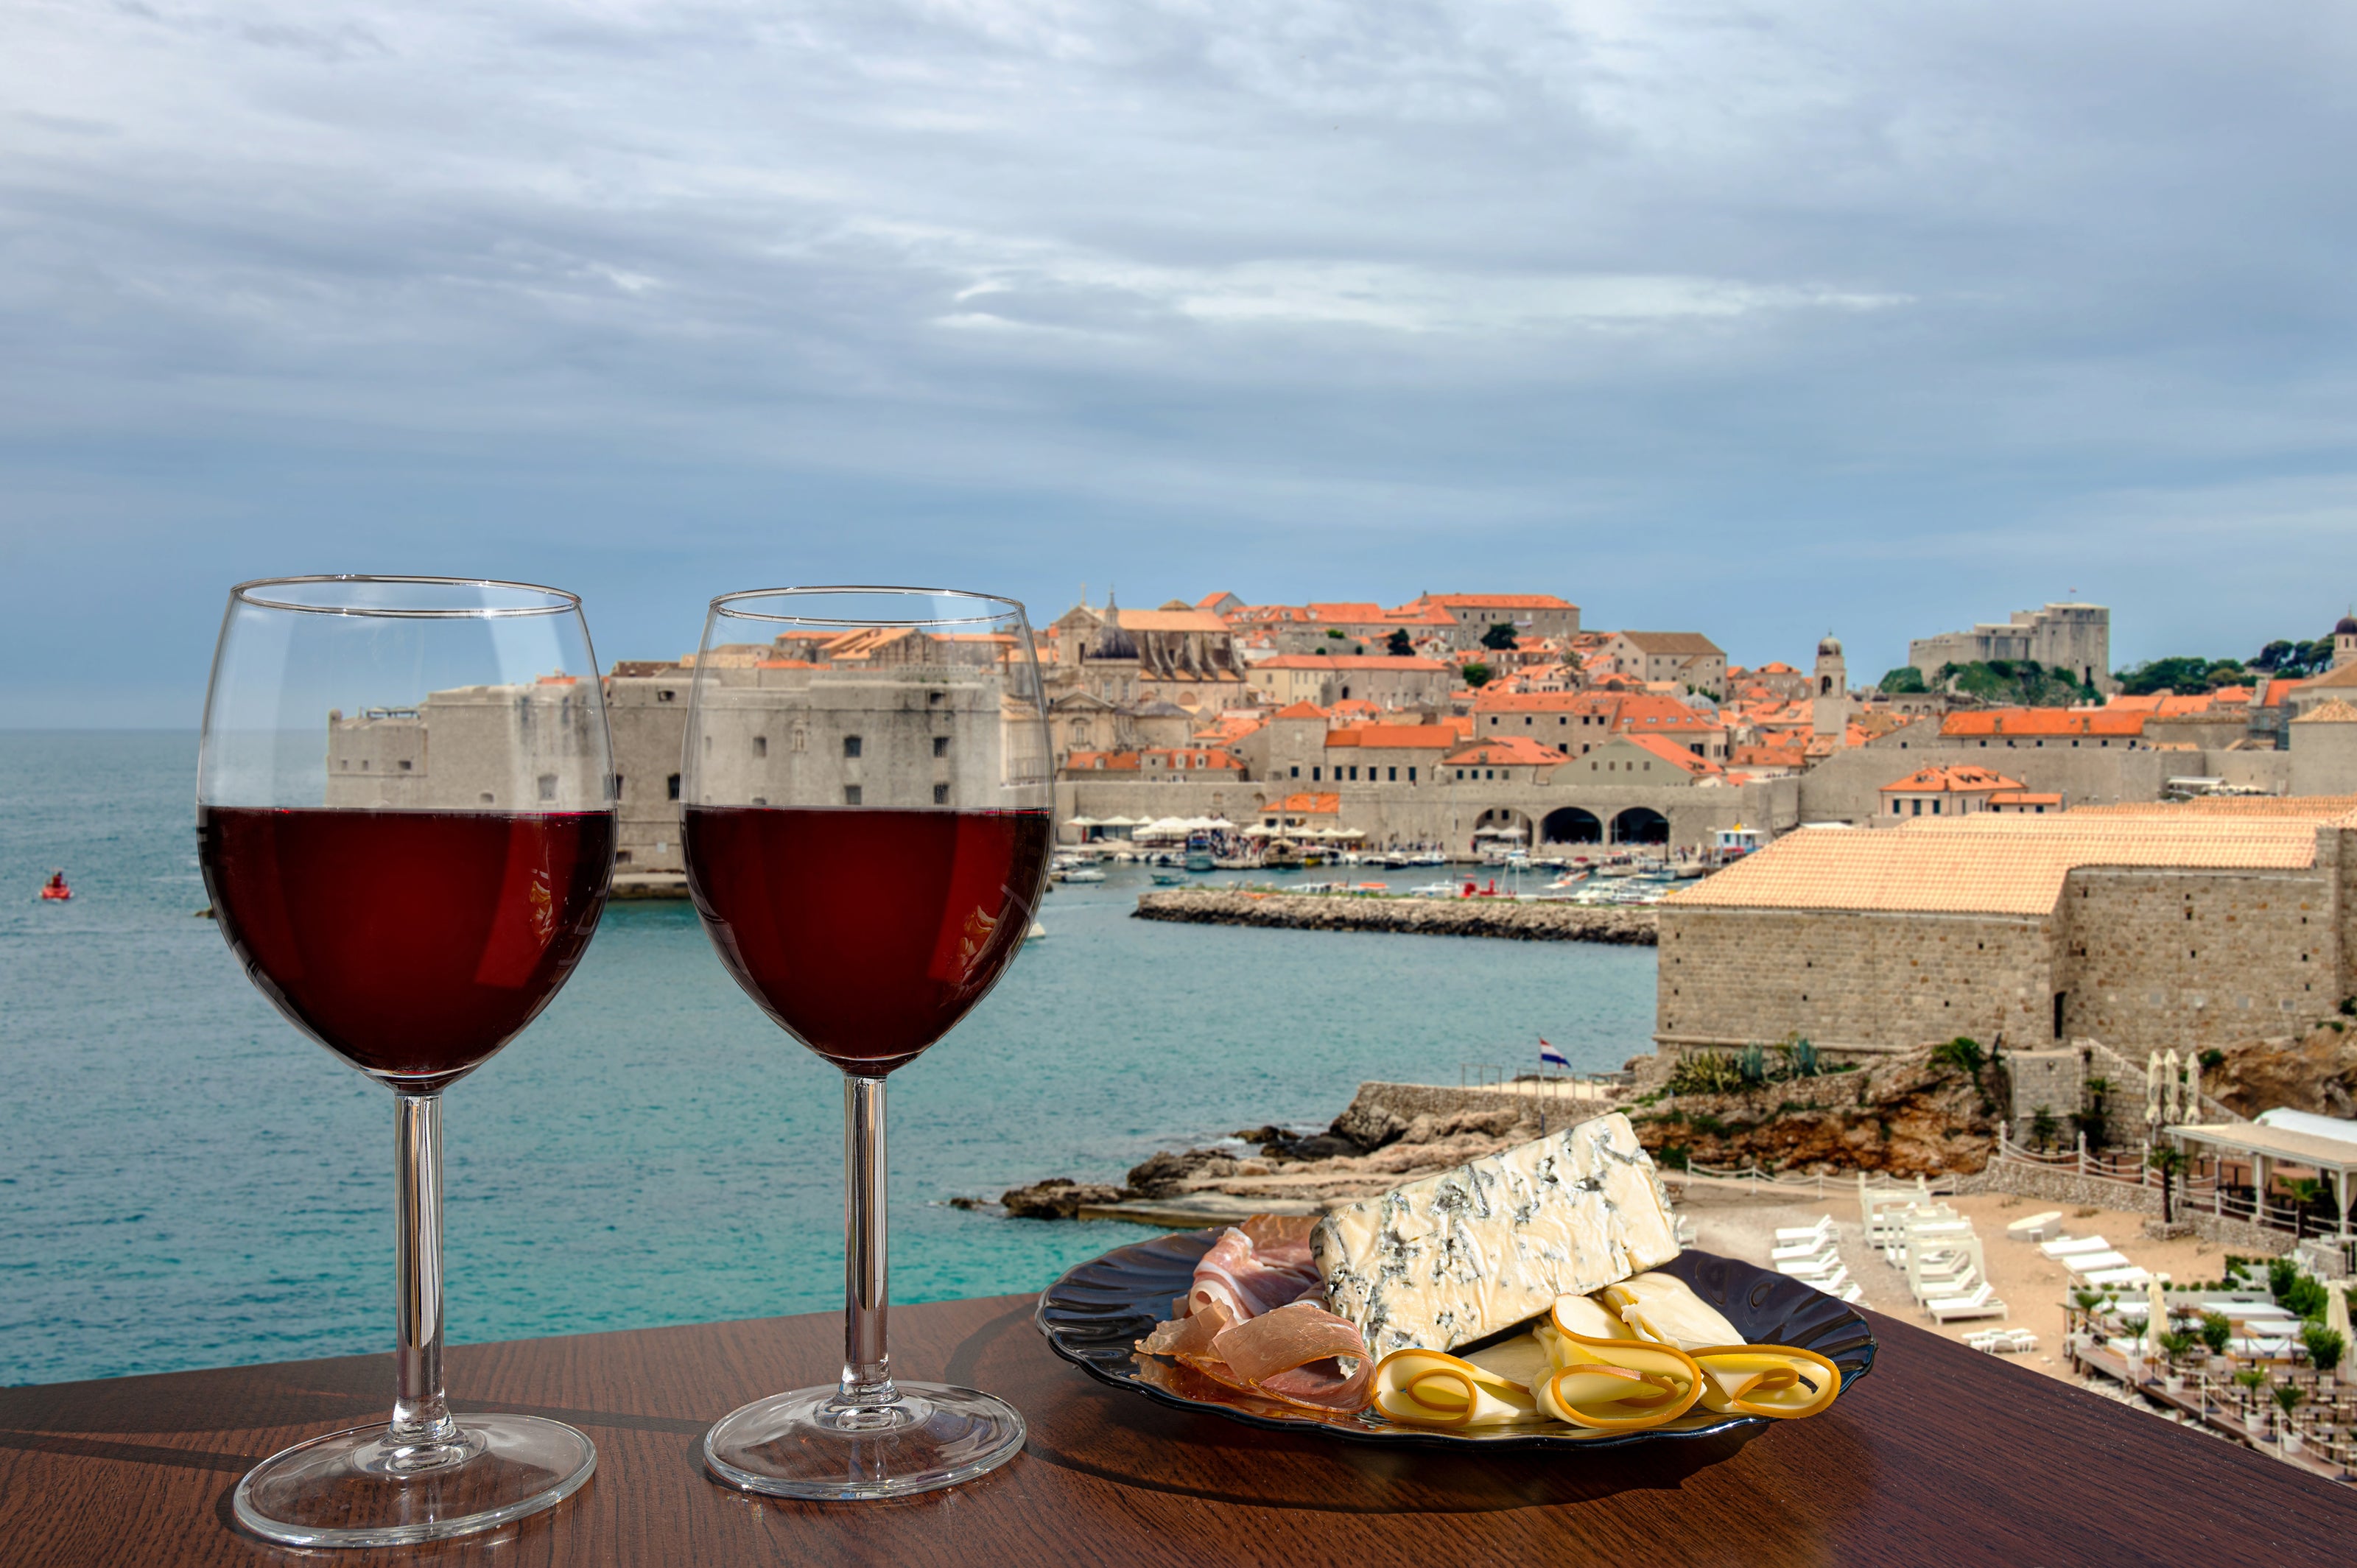 Croatia wine by the beach